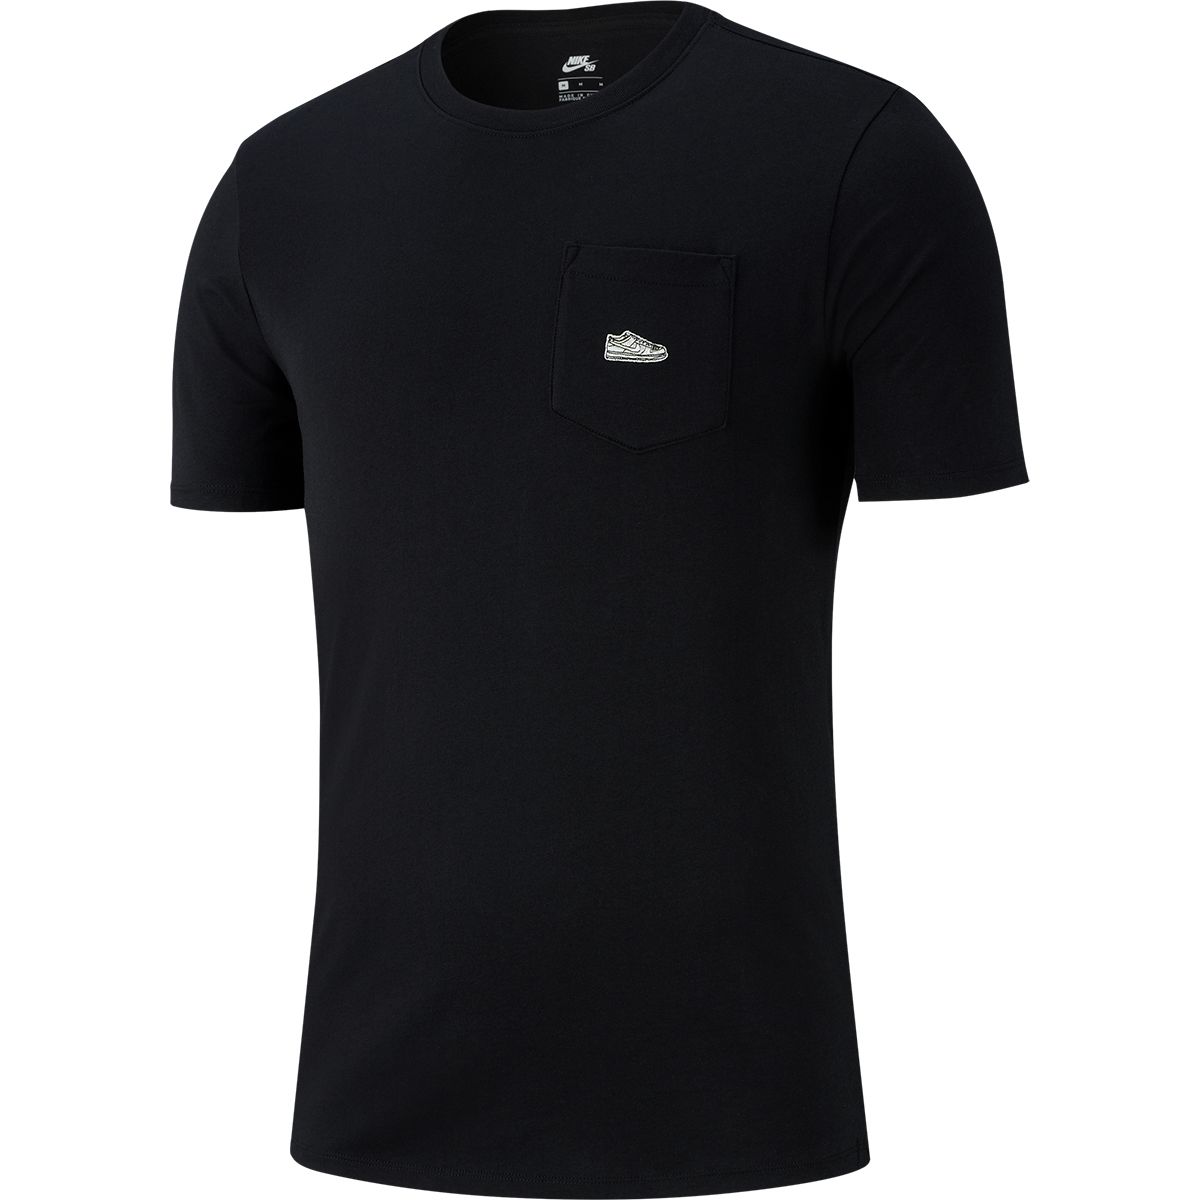 Nike SB Dunk Patch T-Shirt - Men's - Clothing